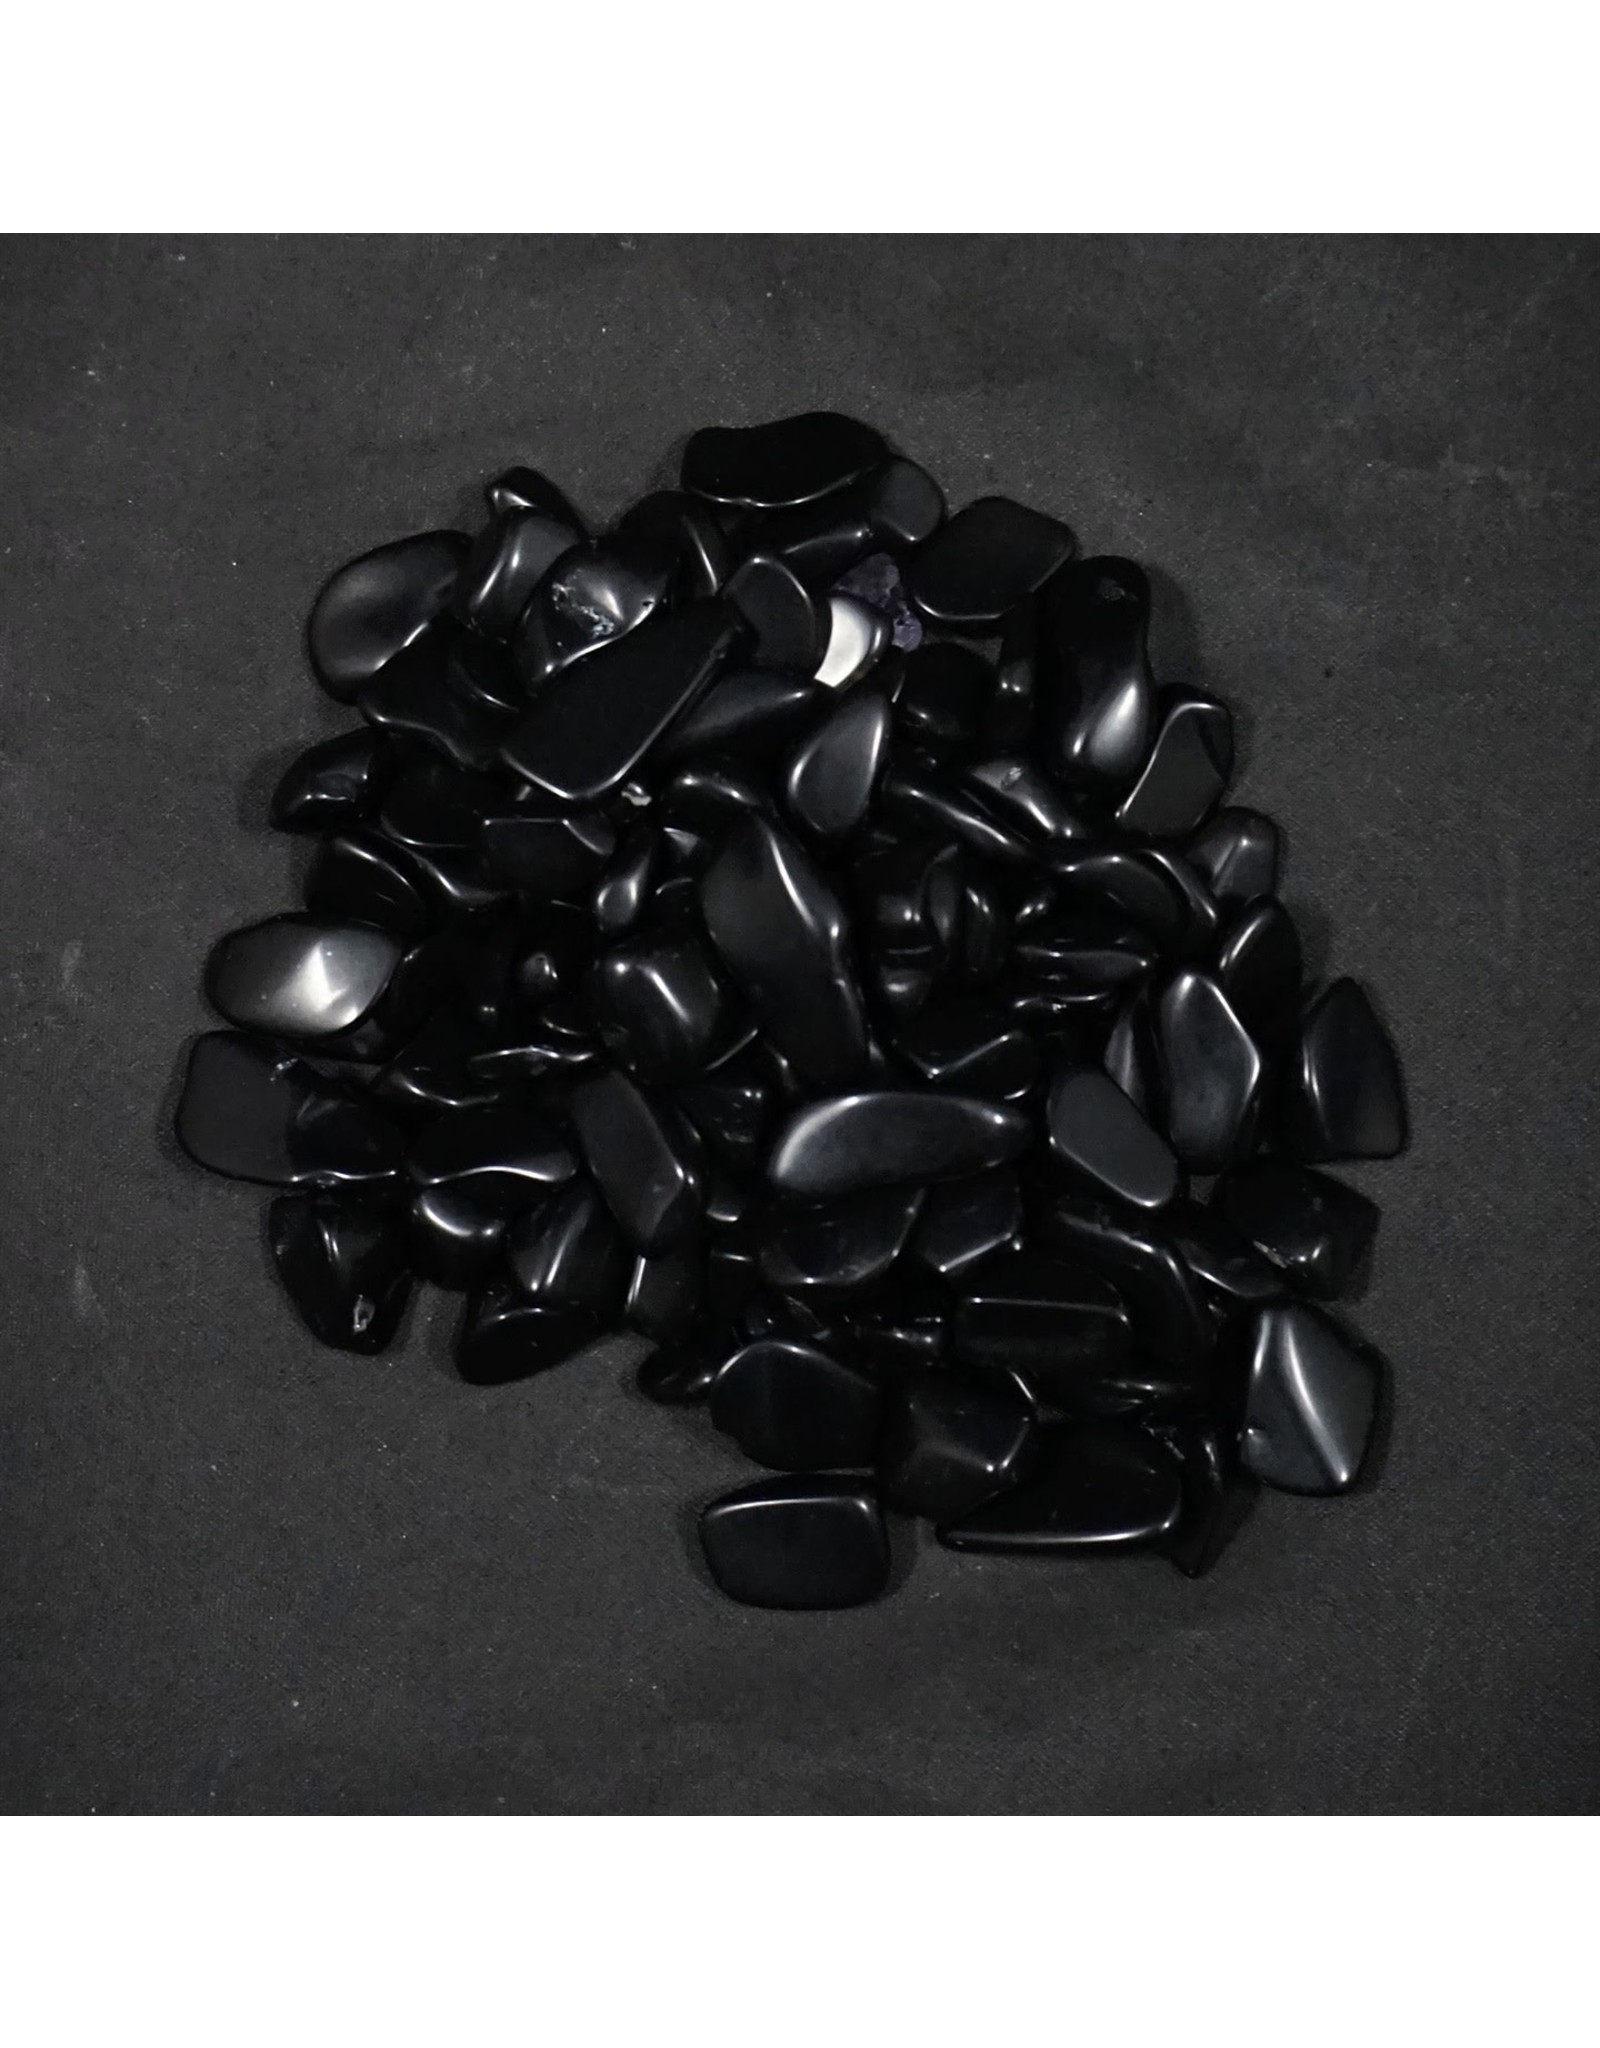 Black Obsidian Tumbled Chips